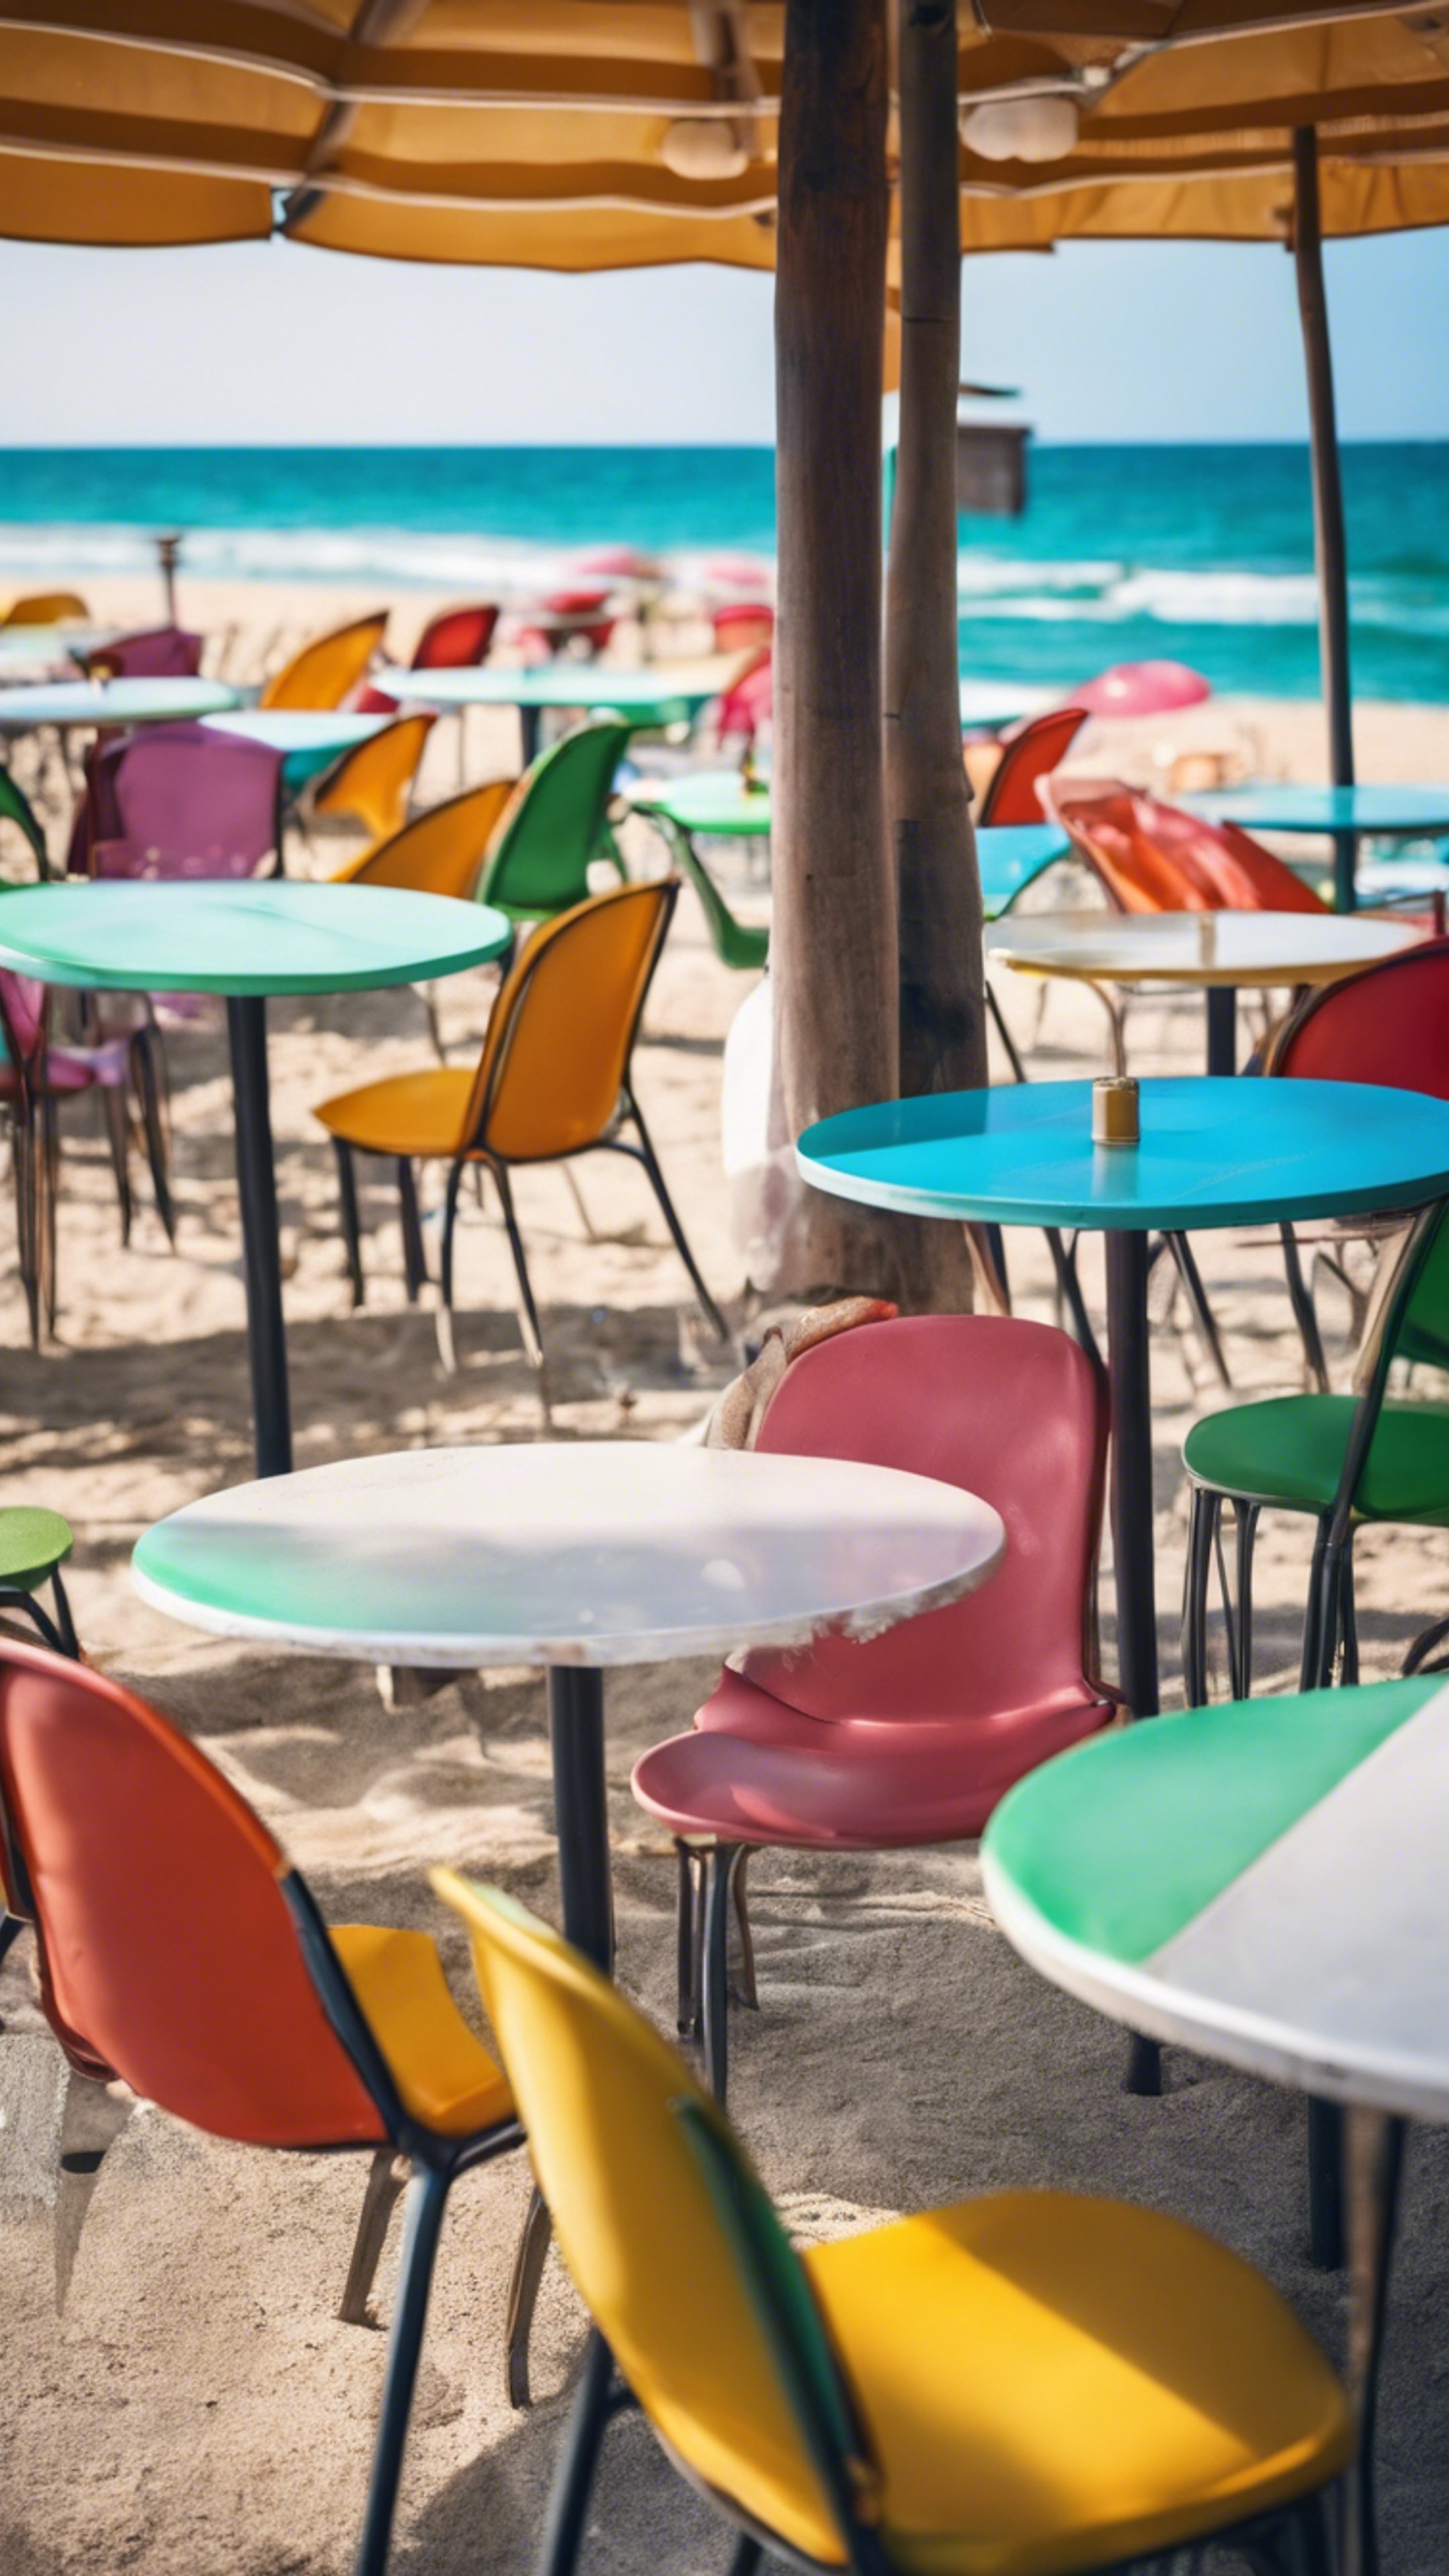 A beach side cafe with colorful chairs, umbrellas, and a panoramic view of the ocean. duvar kağıdı[e8a344cbd52d49a3867e]